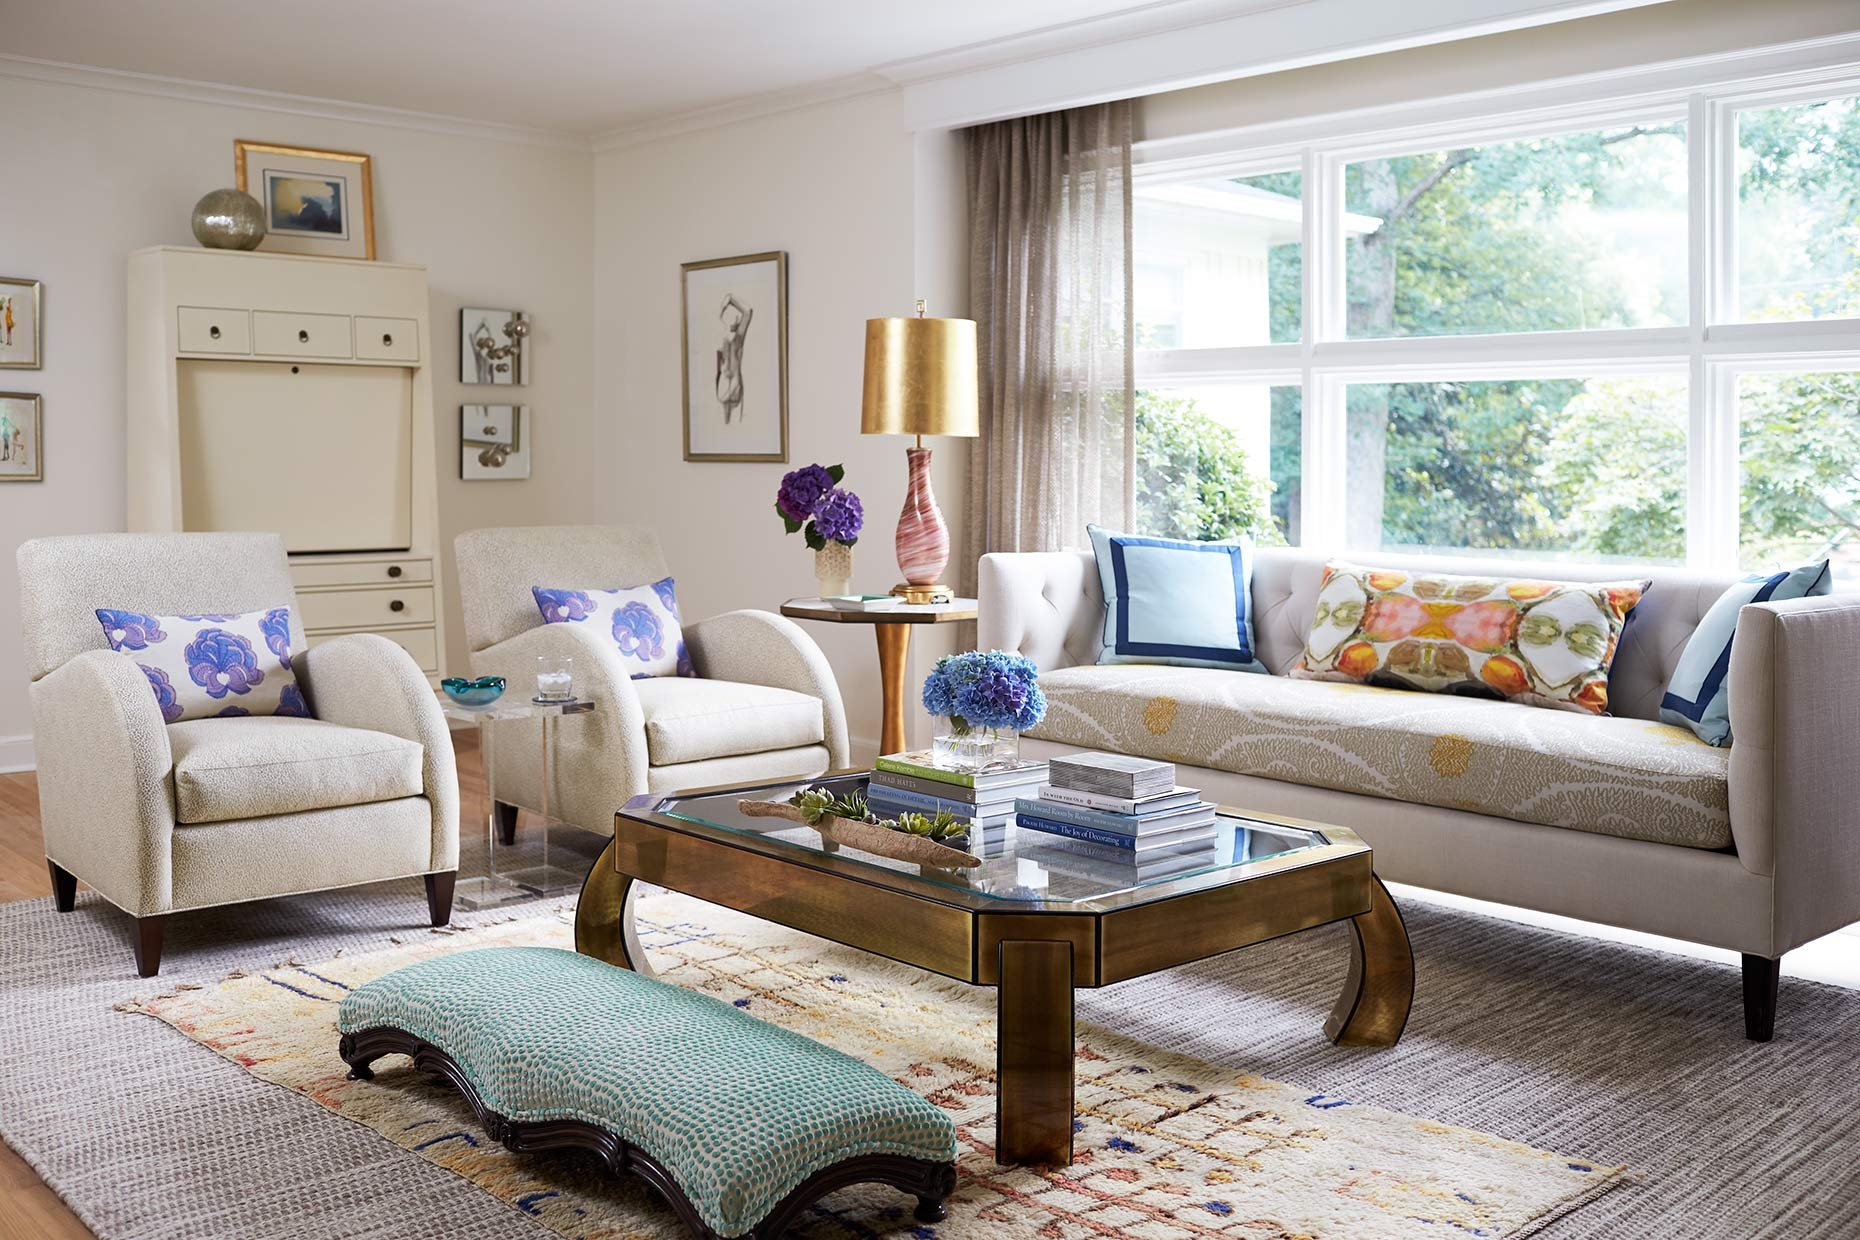 Home Decor Ideas - Mixing Antique Furniture and Contemporary Decor